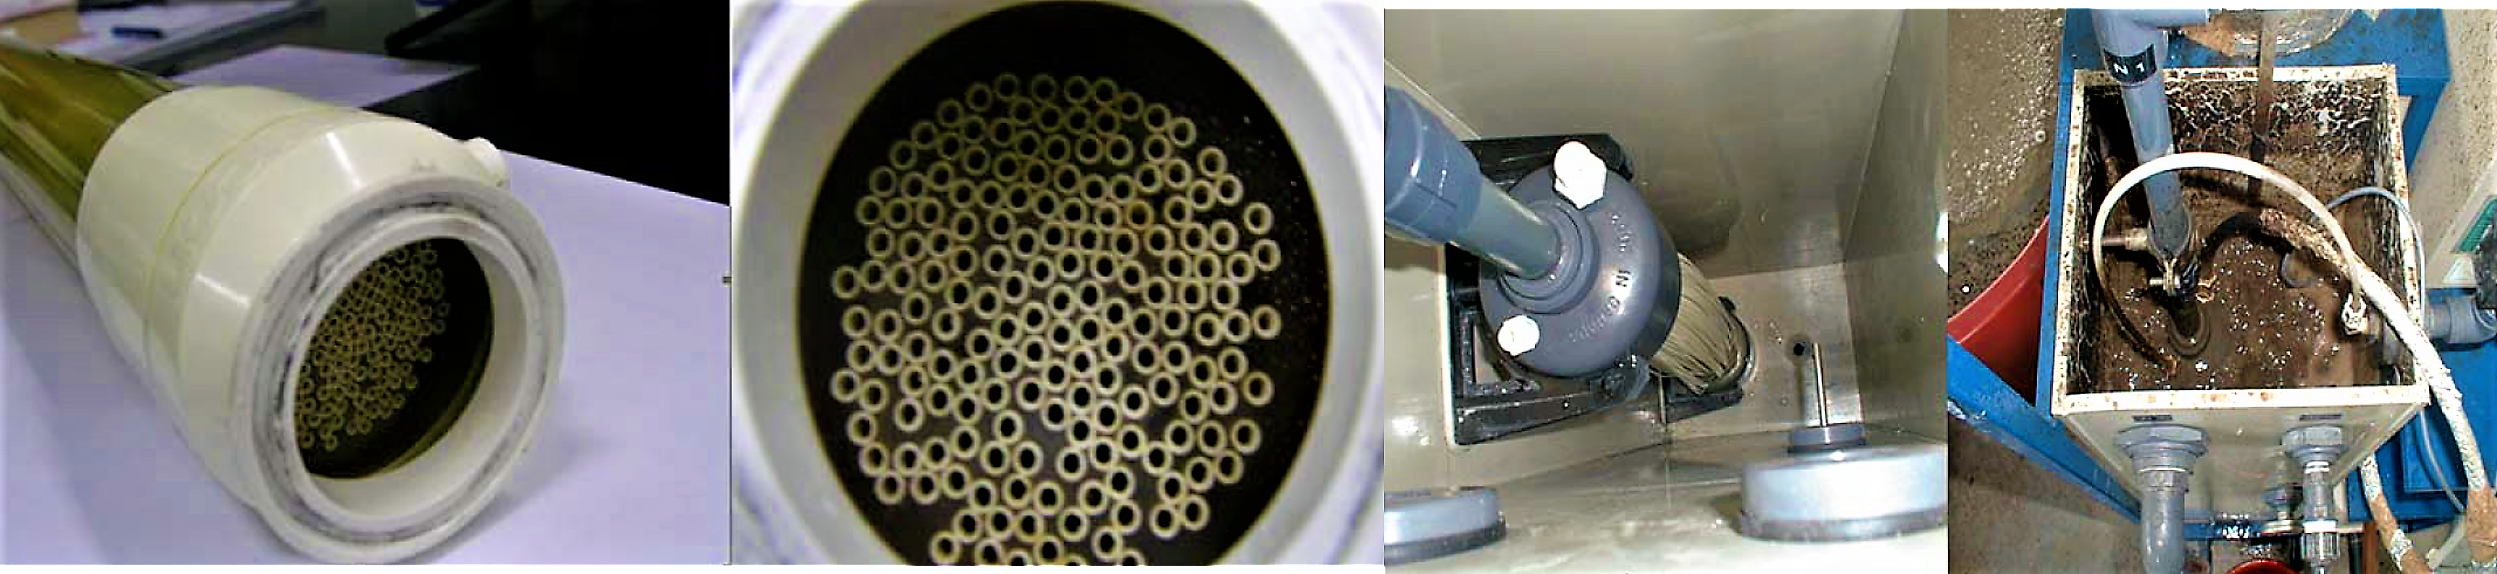 Hollow-fibre (HF) membrane module (Zenon, Canada) filtrating activated sludge under vacuum. Source: RADJENOVIC et al. (2008)   